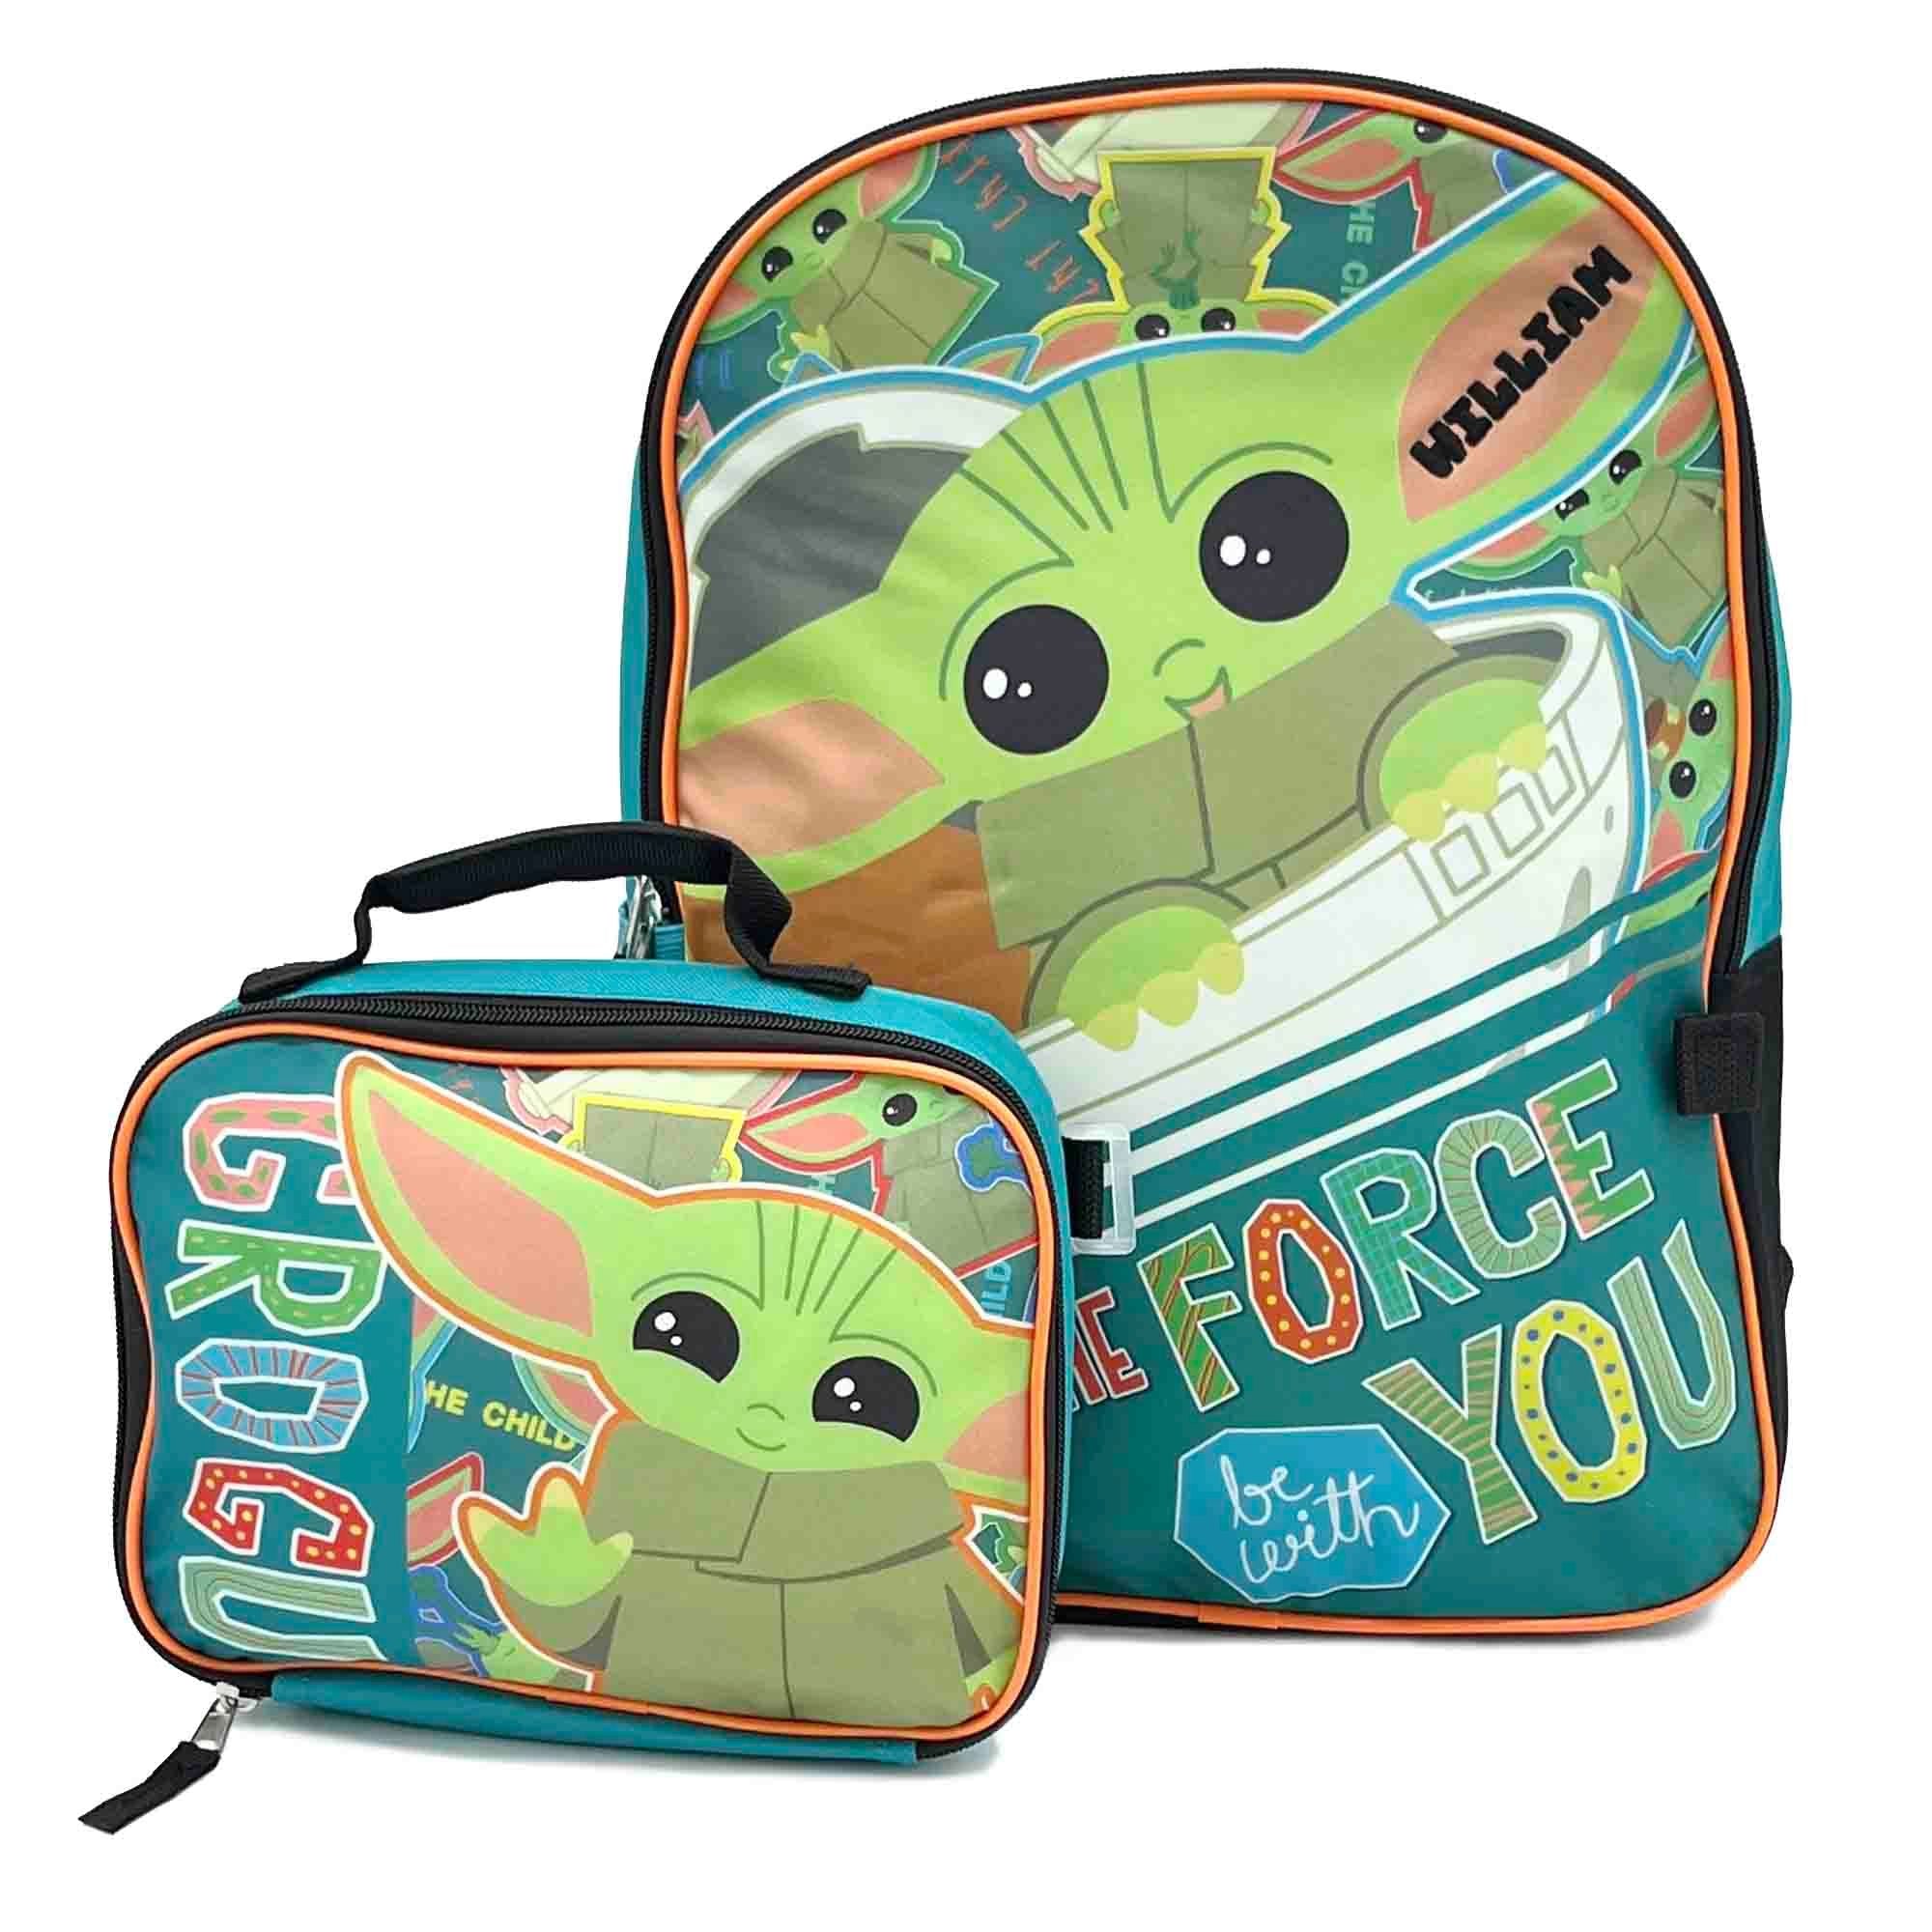 Lucas Star Wars Green Grogu Insulated Lunch Bag